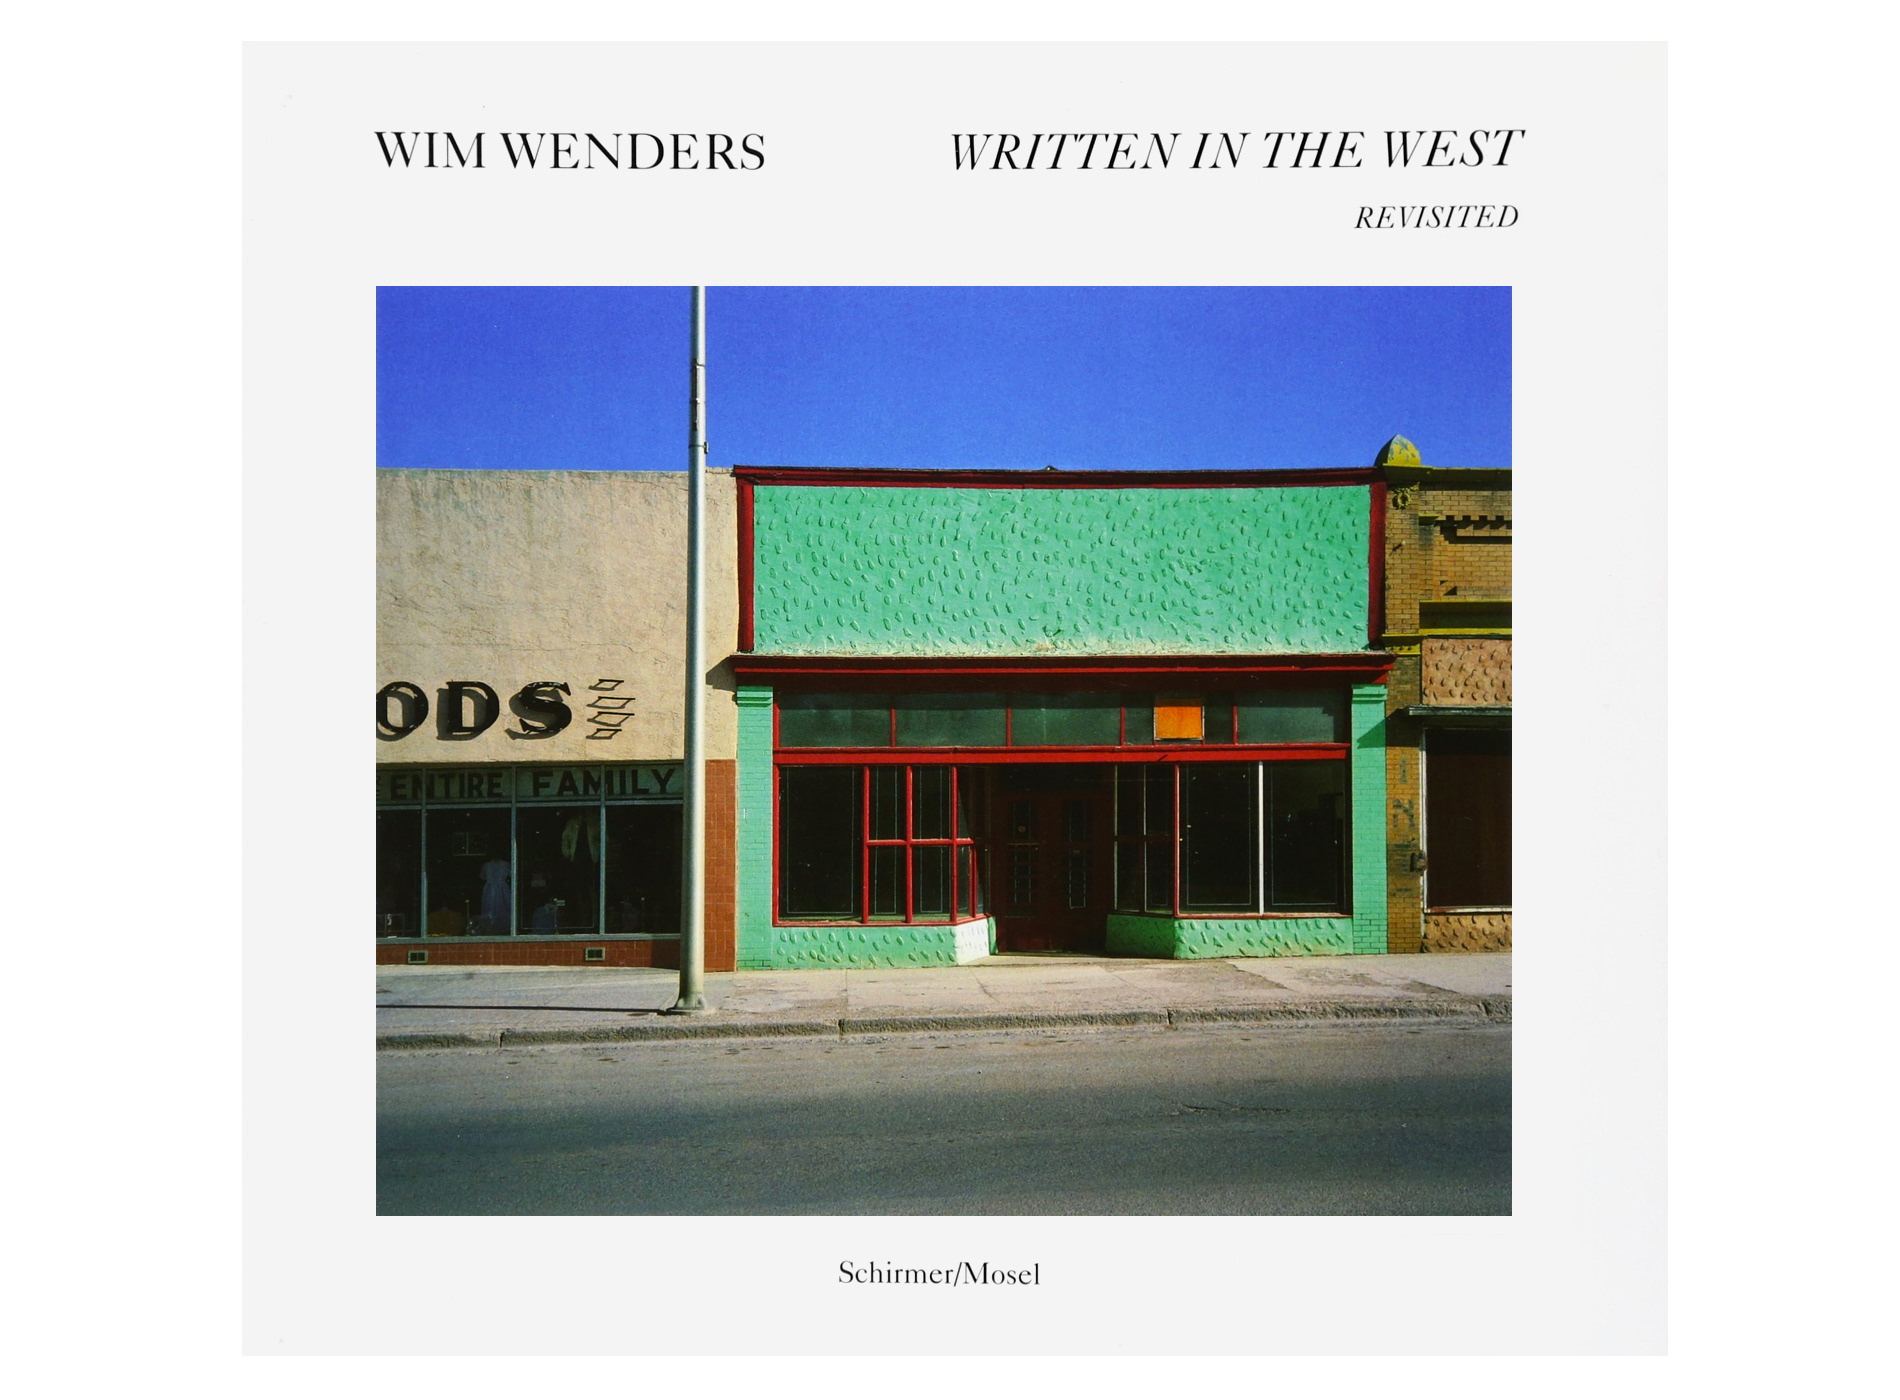 Paris, Texas - Written in the West. Wim Wenders